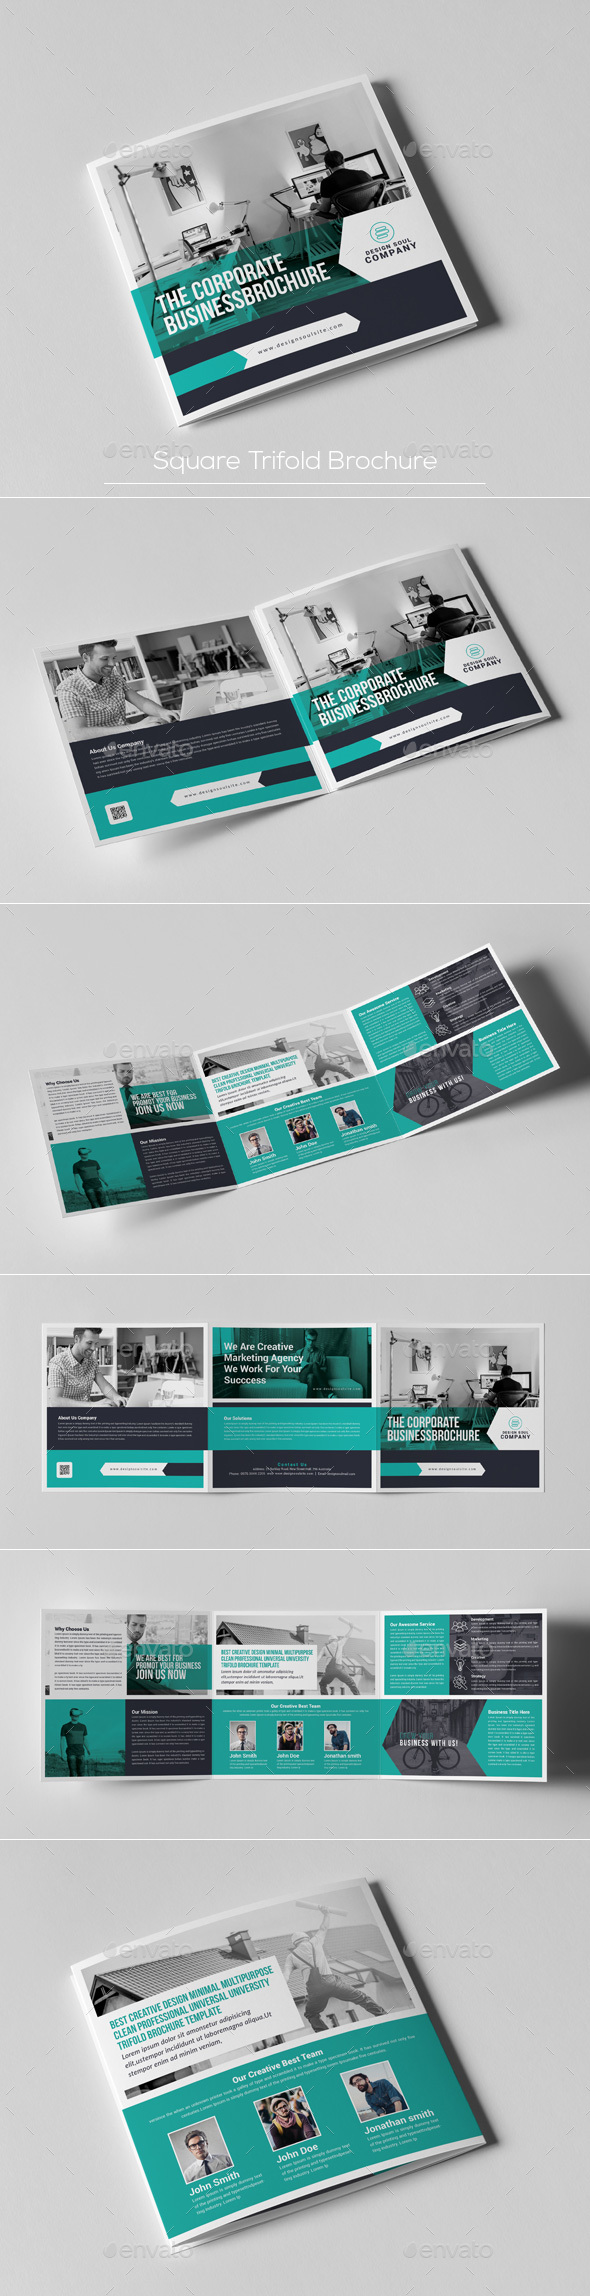 Square Trifold Brochure by designsoul14 | GraphicRiver